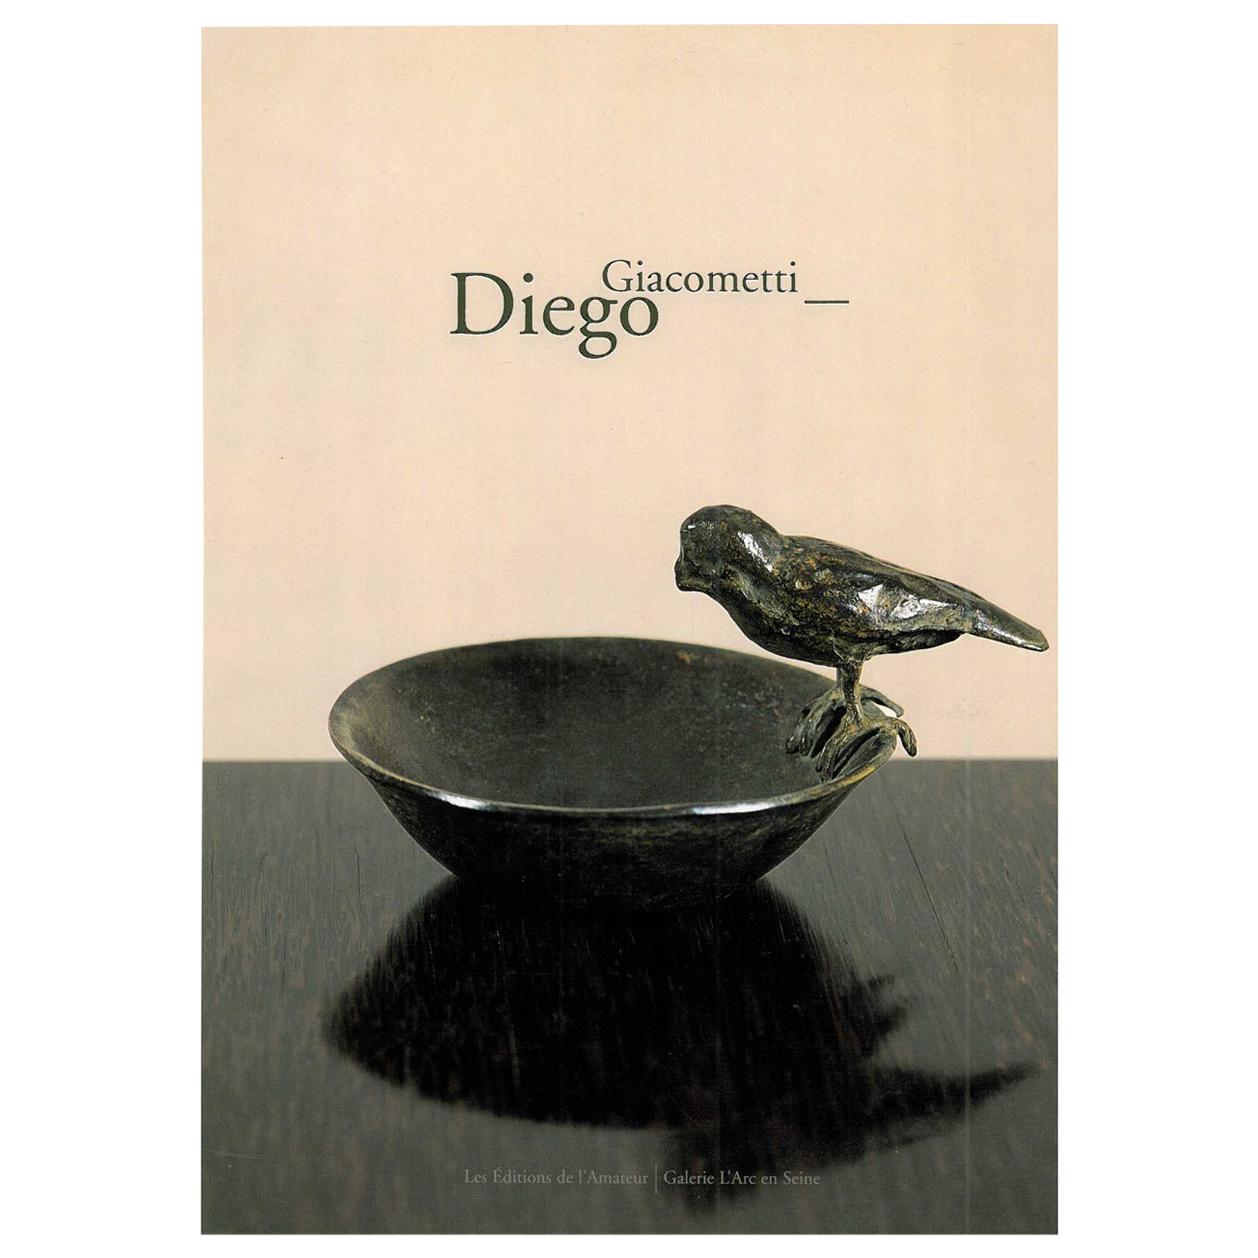 Diego Giacometti by Christian Boutonnet & Rafael Ortiz (Book)